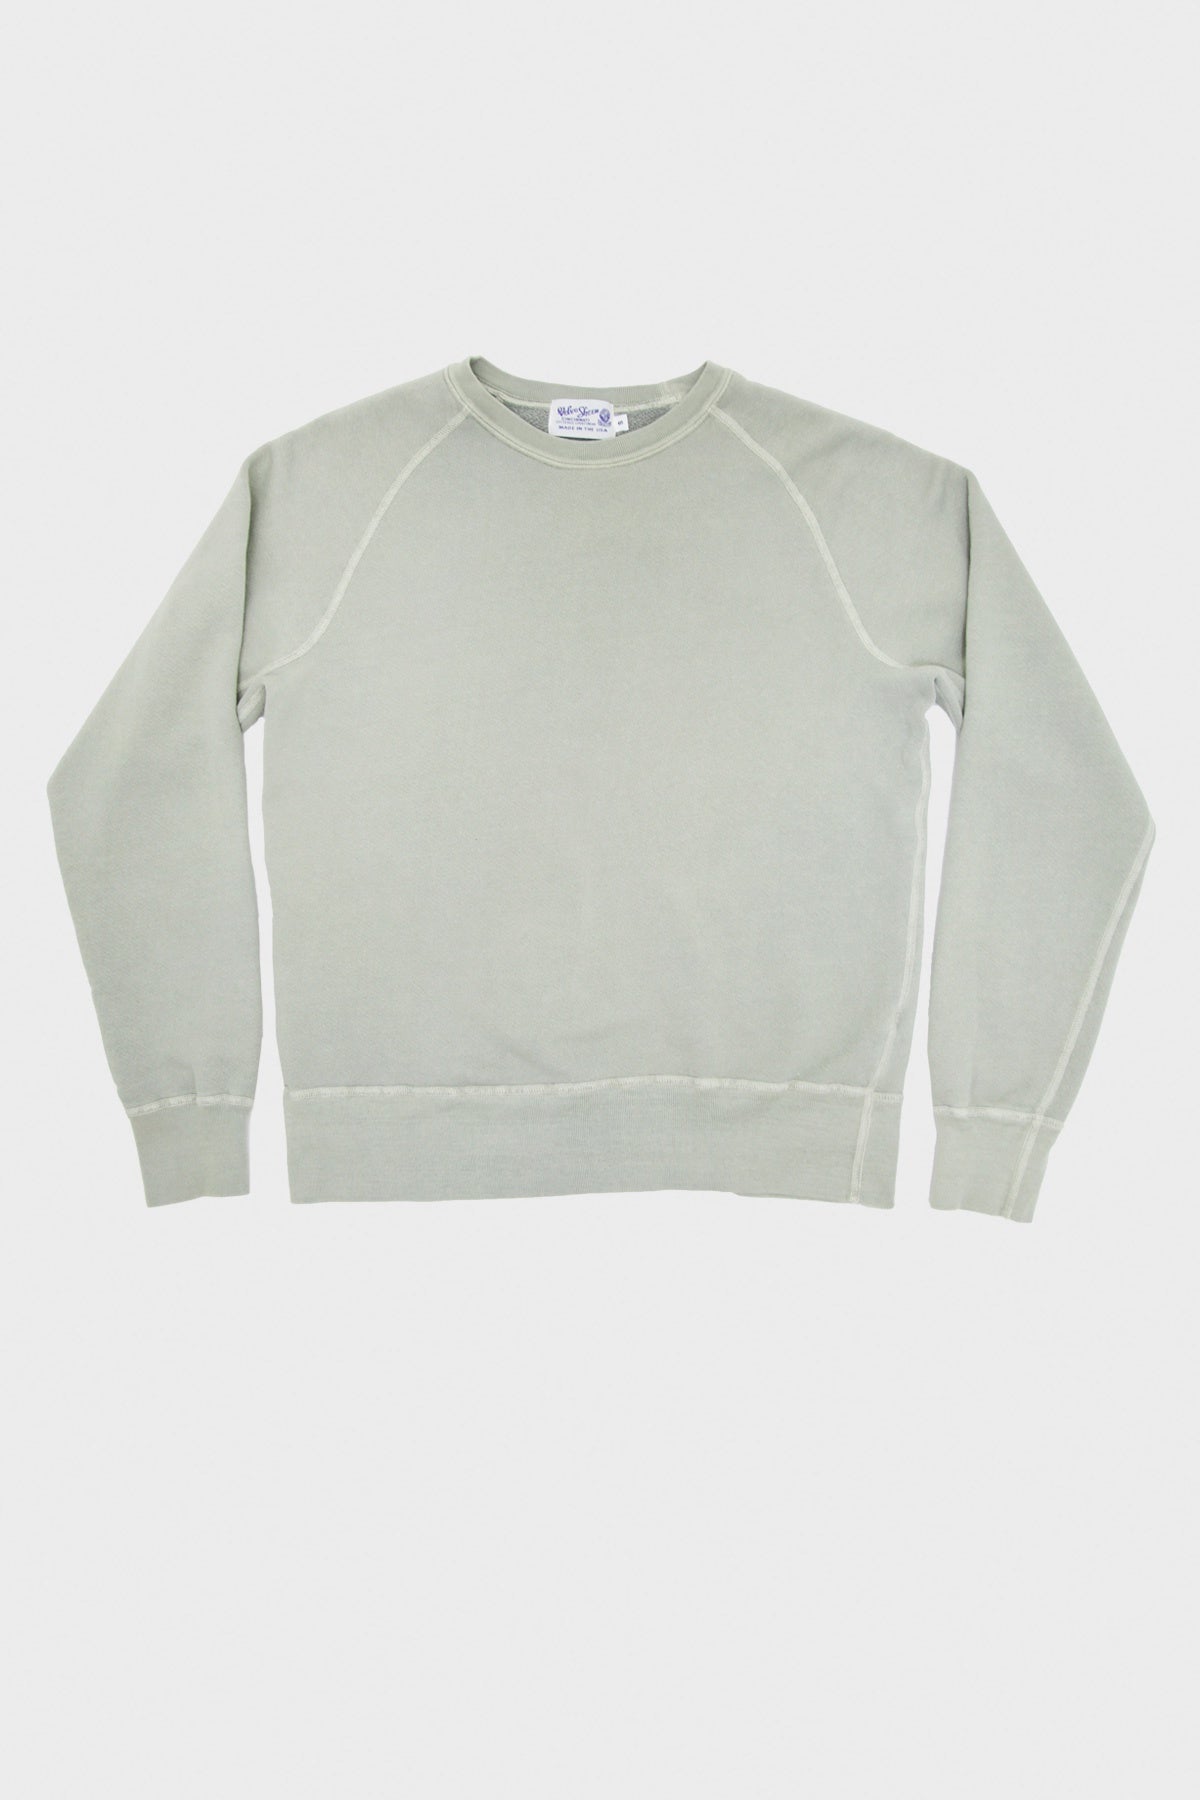 Velva Sheen 8oz Pigment Freedom Sweatshirt, Grey